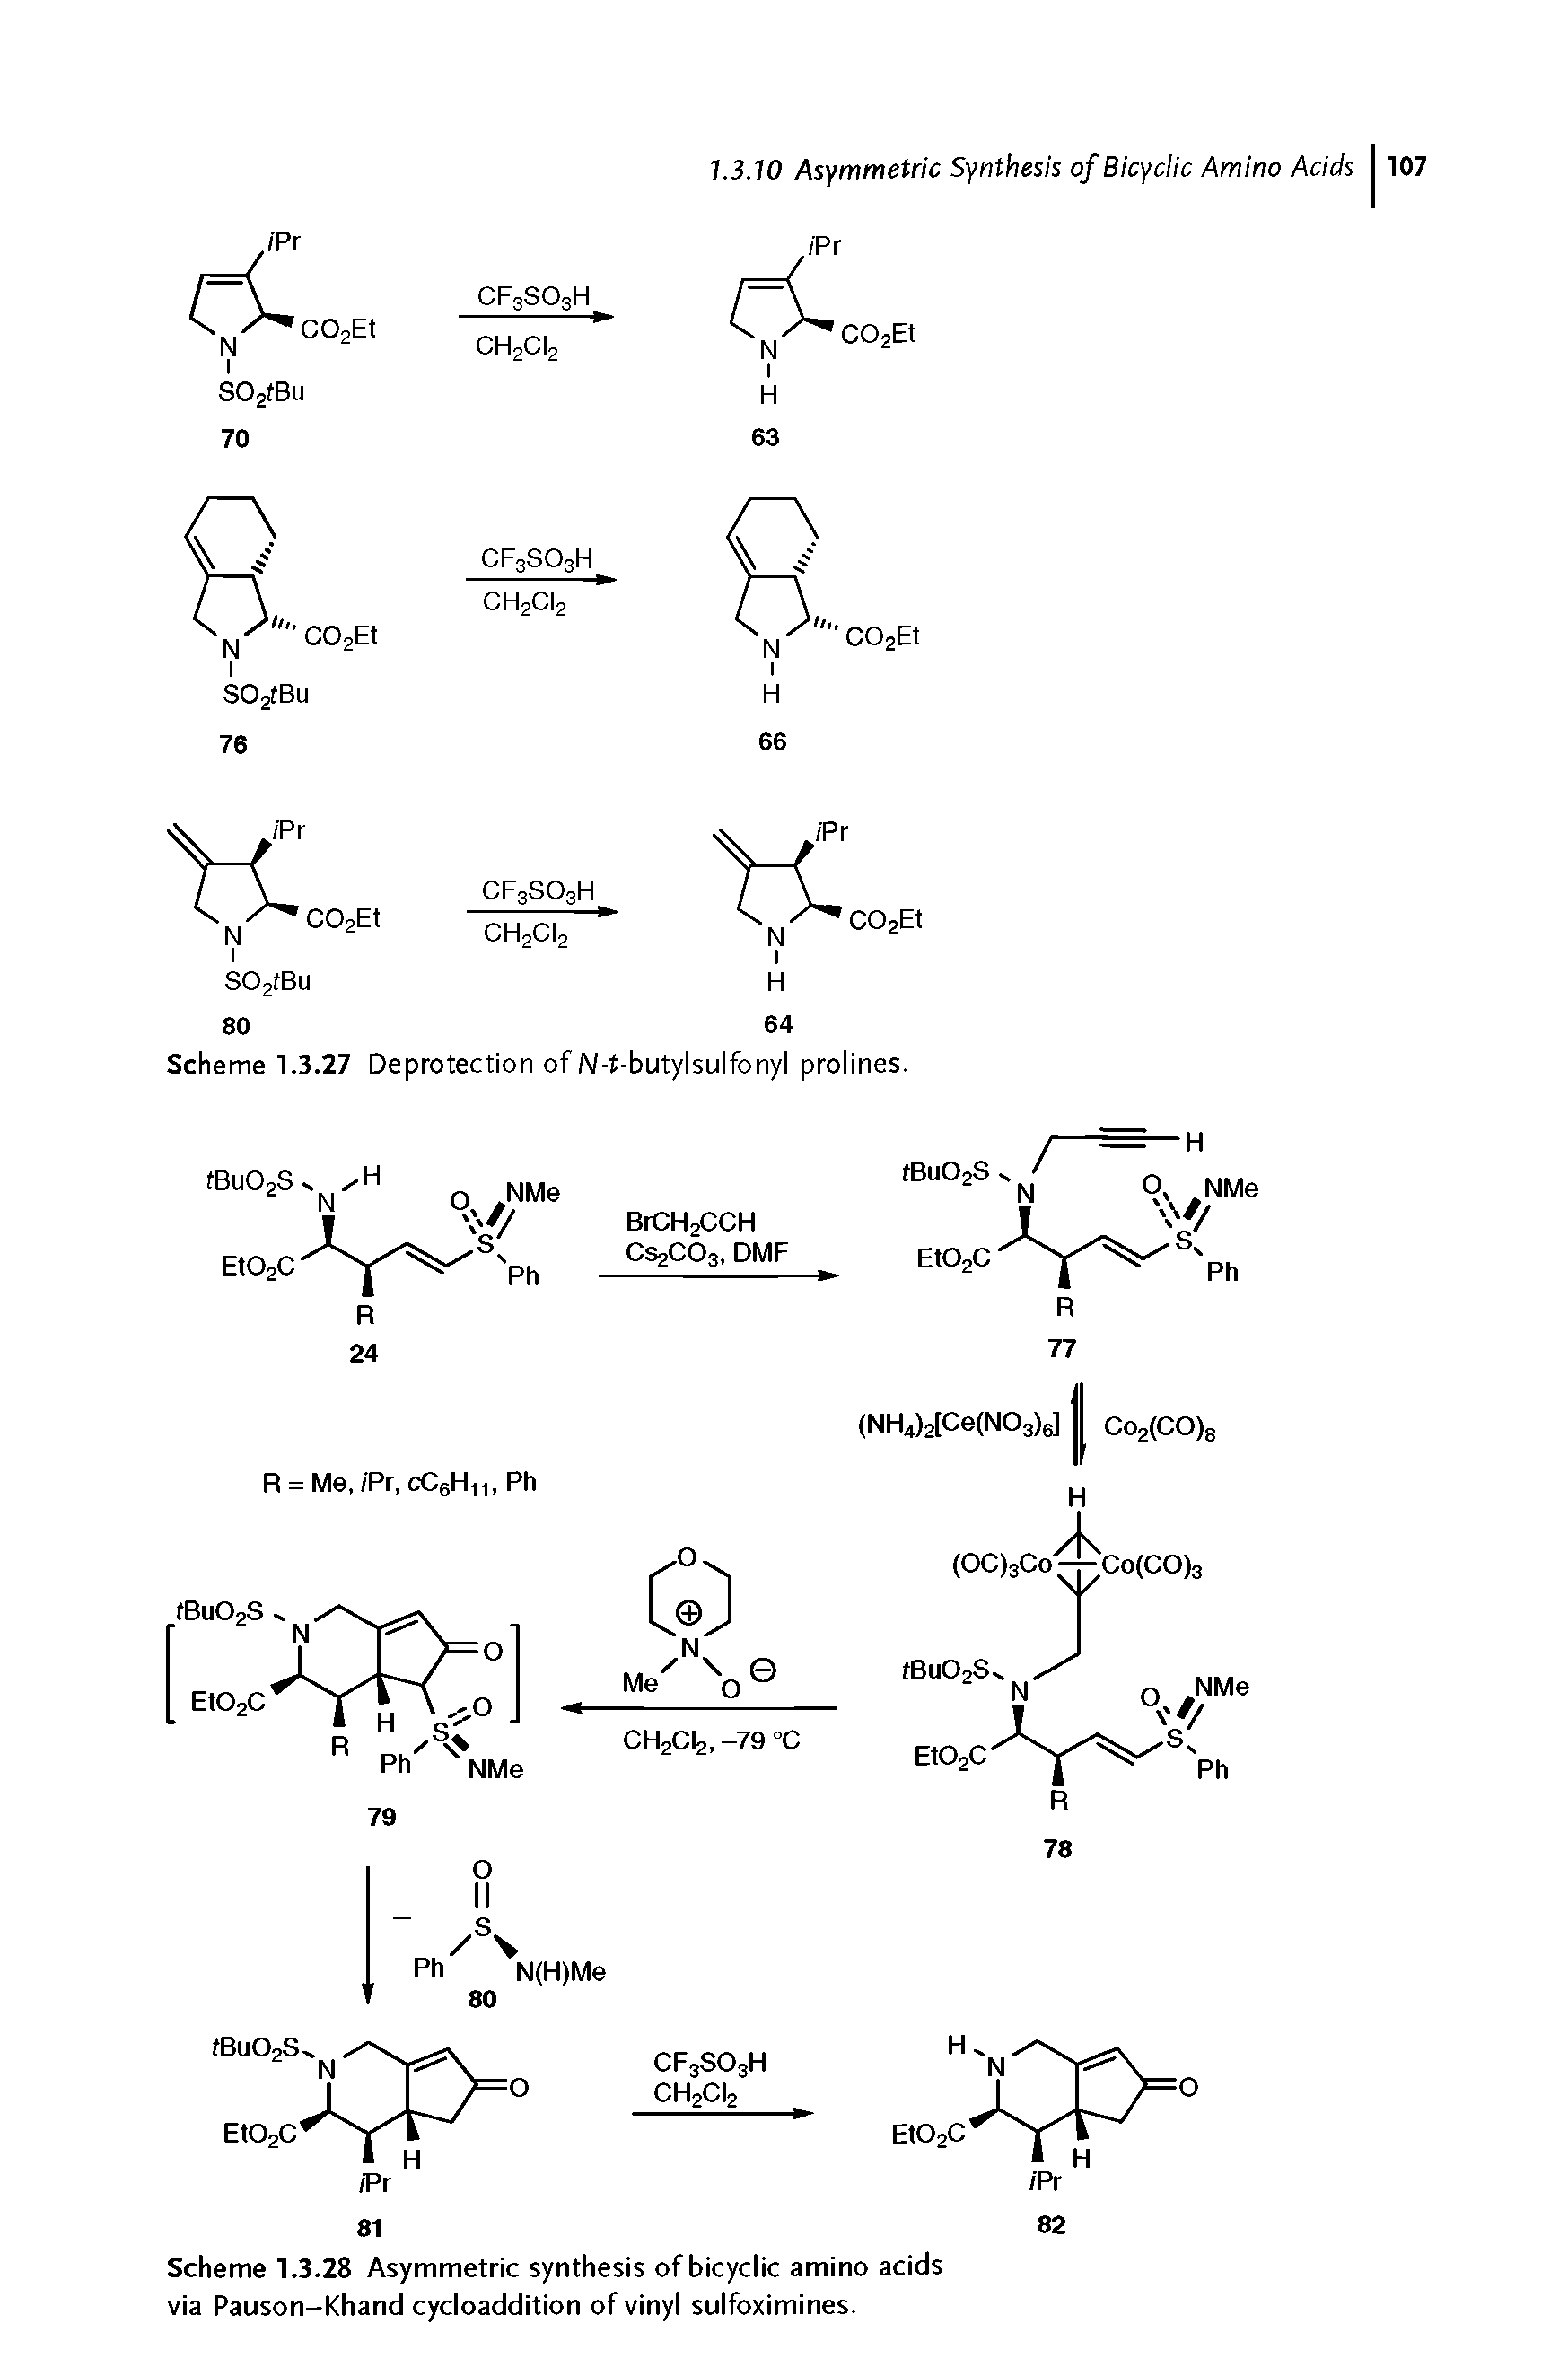 Scheme 1.3.28 Asymmetric synthesis of bicyclic amino acids via Pauson-Khand cycloaddition of vinyl sulfoximines.